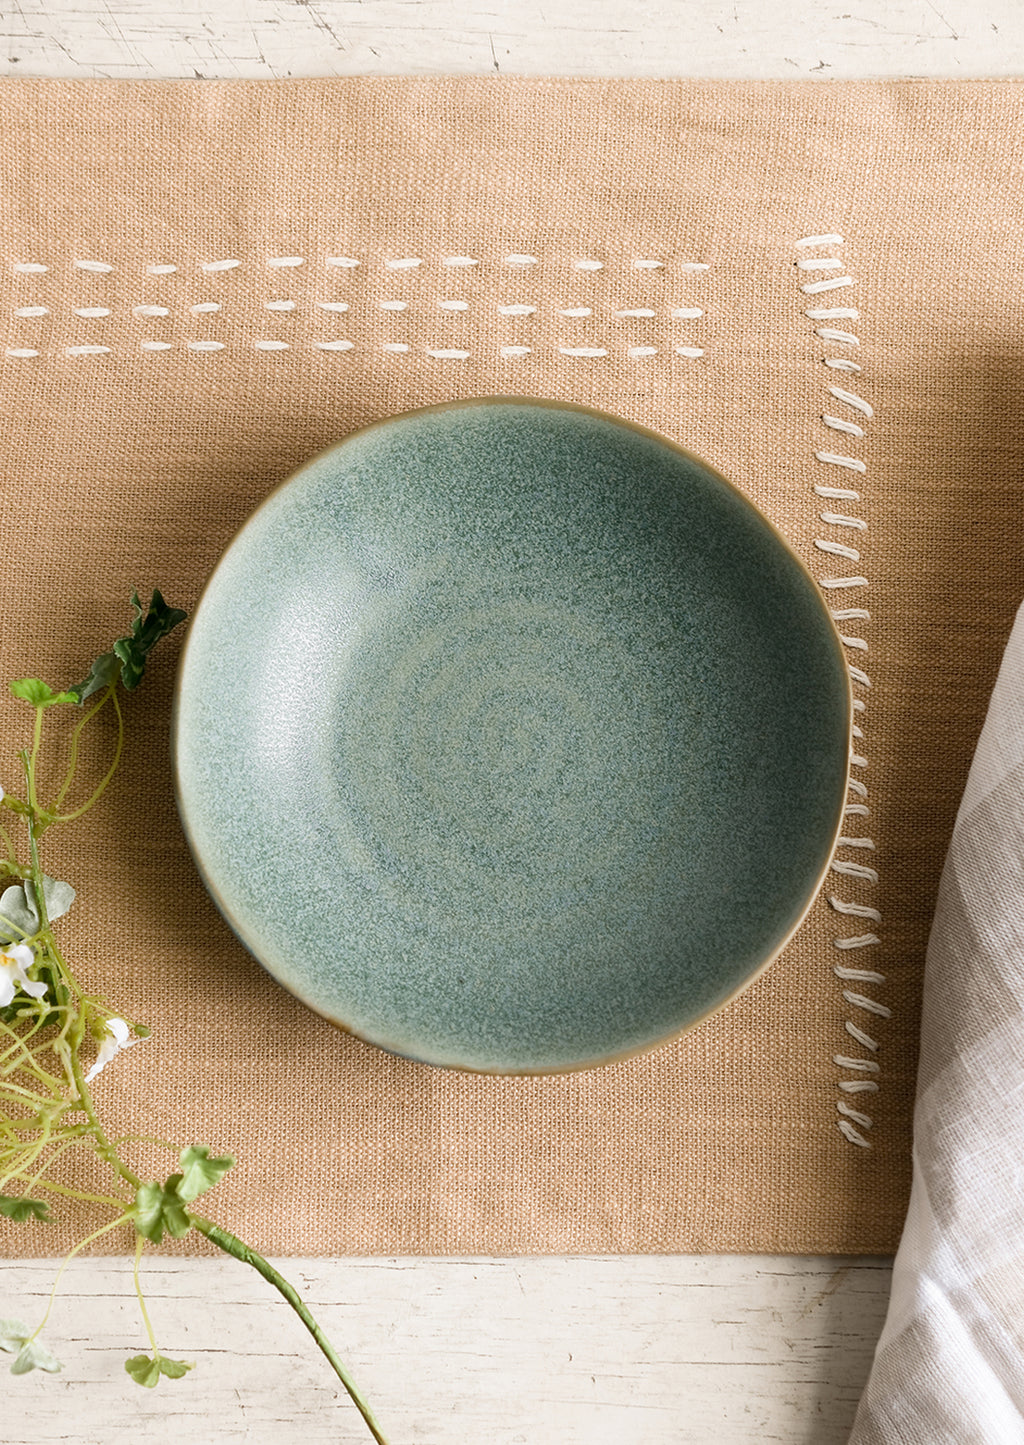 2: A mossy green-blue shallow ceramic bowl.